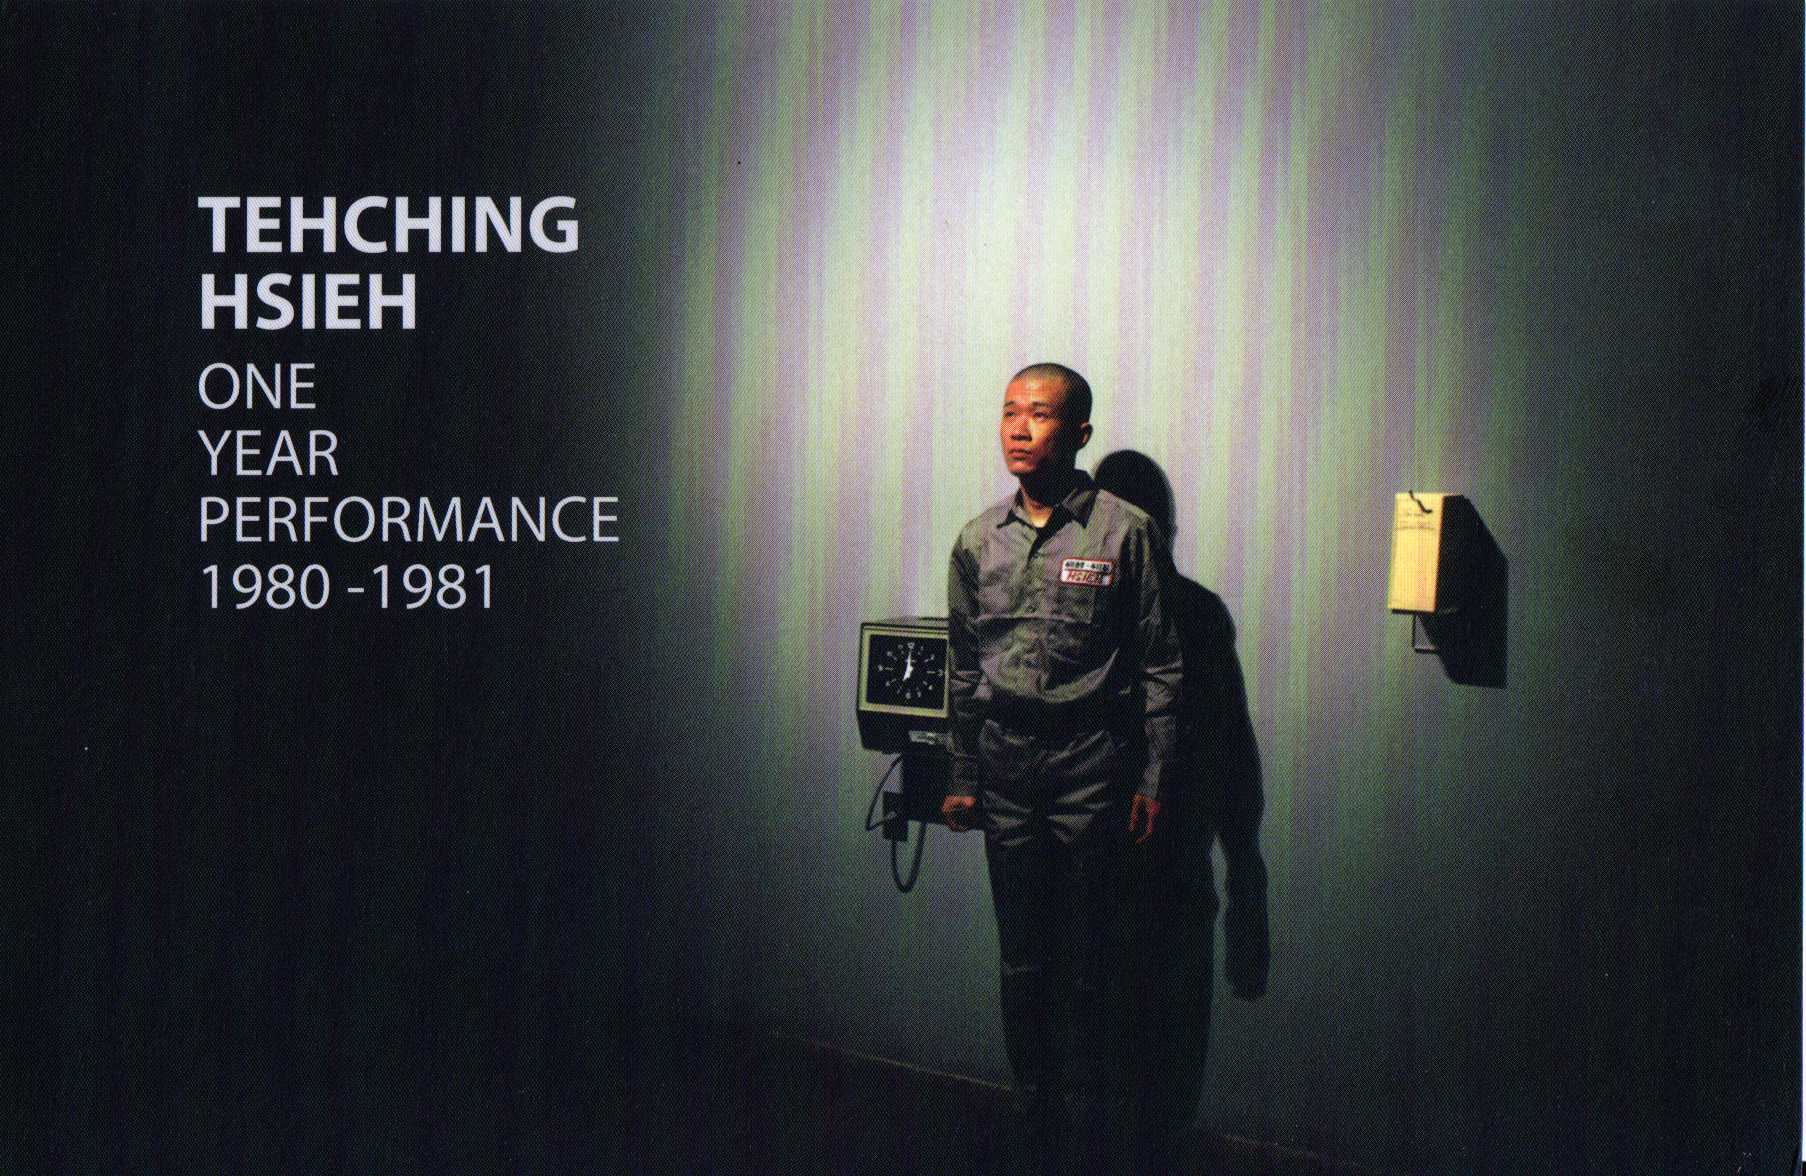 Guggenheim Postcard: One Year Performance 1980-1981